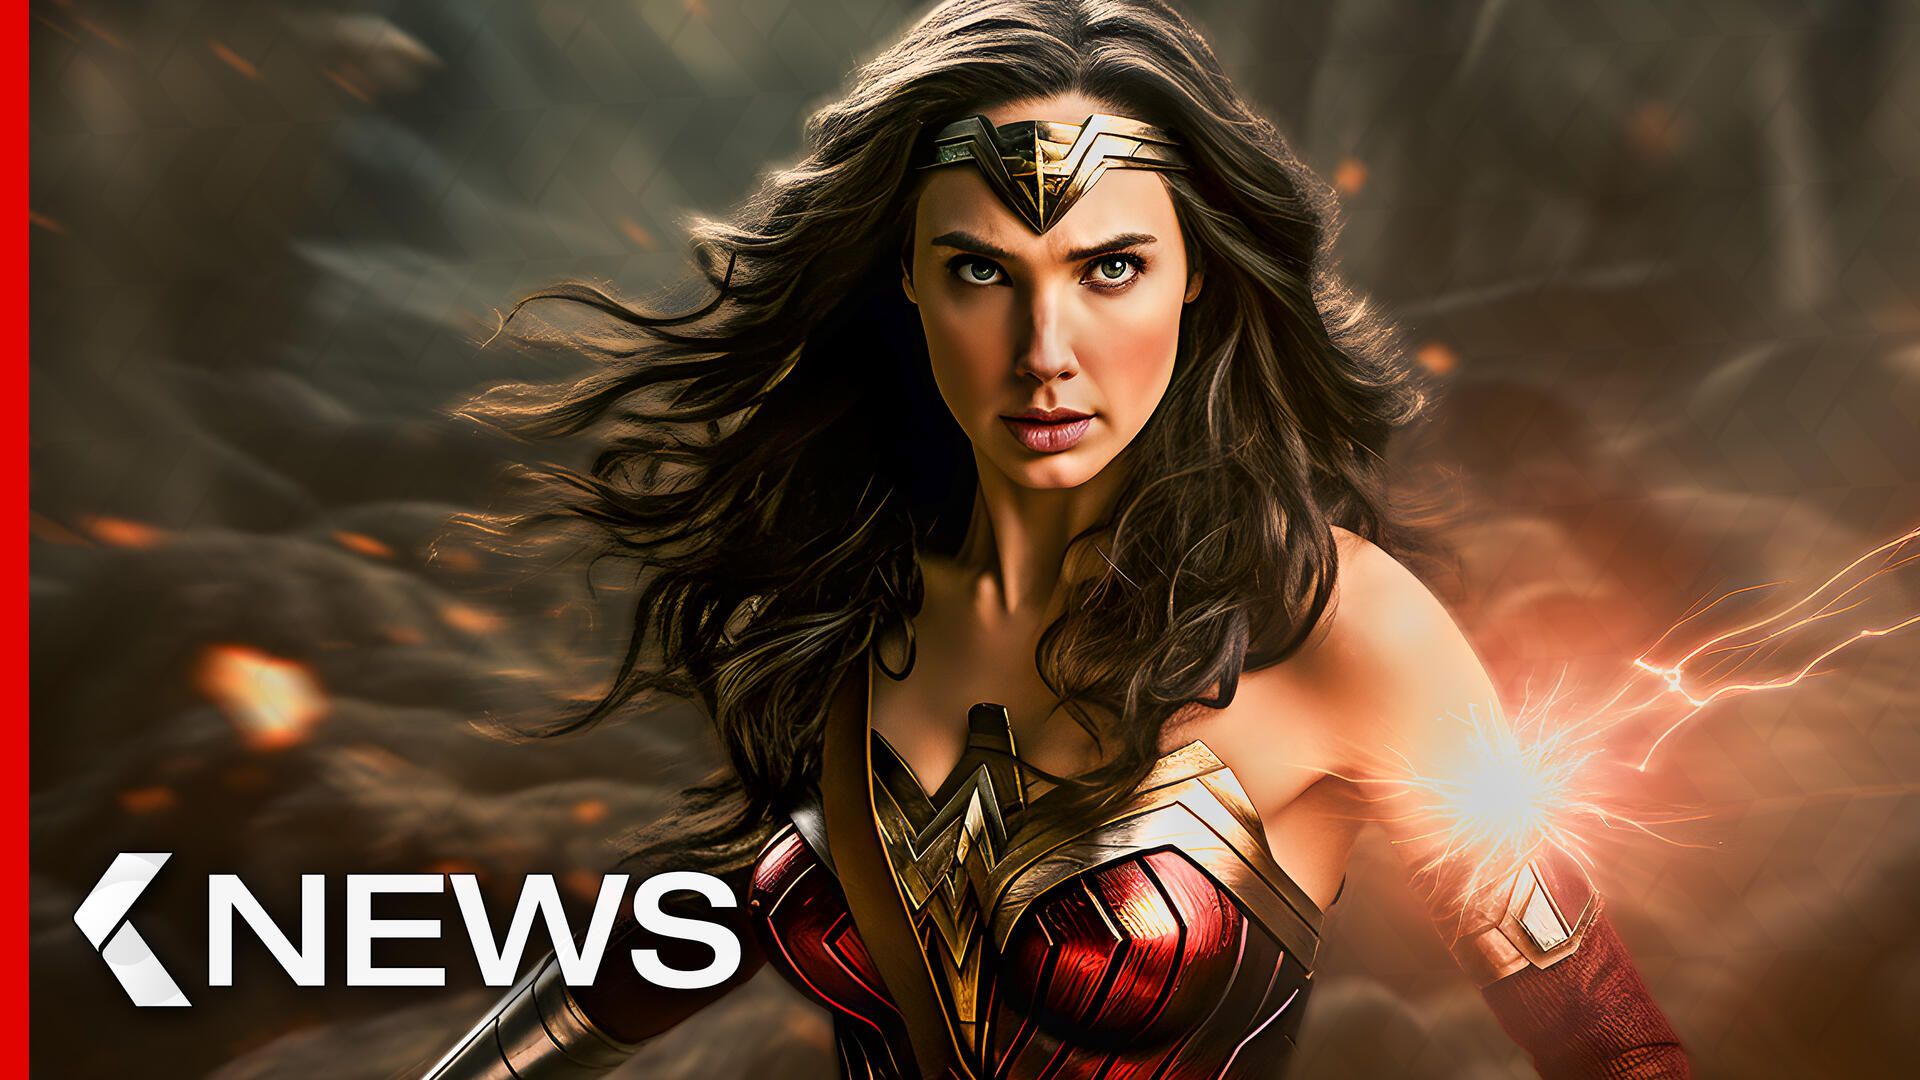 The Flash Movie Photos Reveal HD Look at Gal Gadot's Wonder Woman